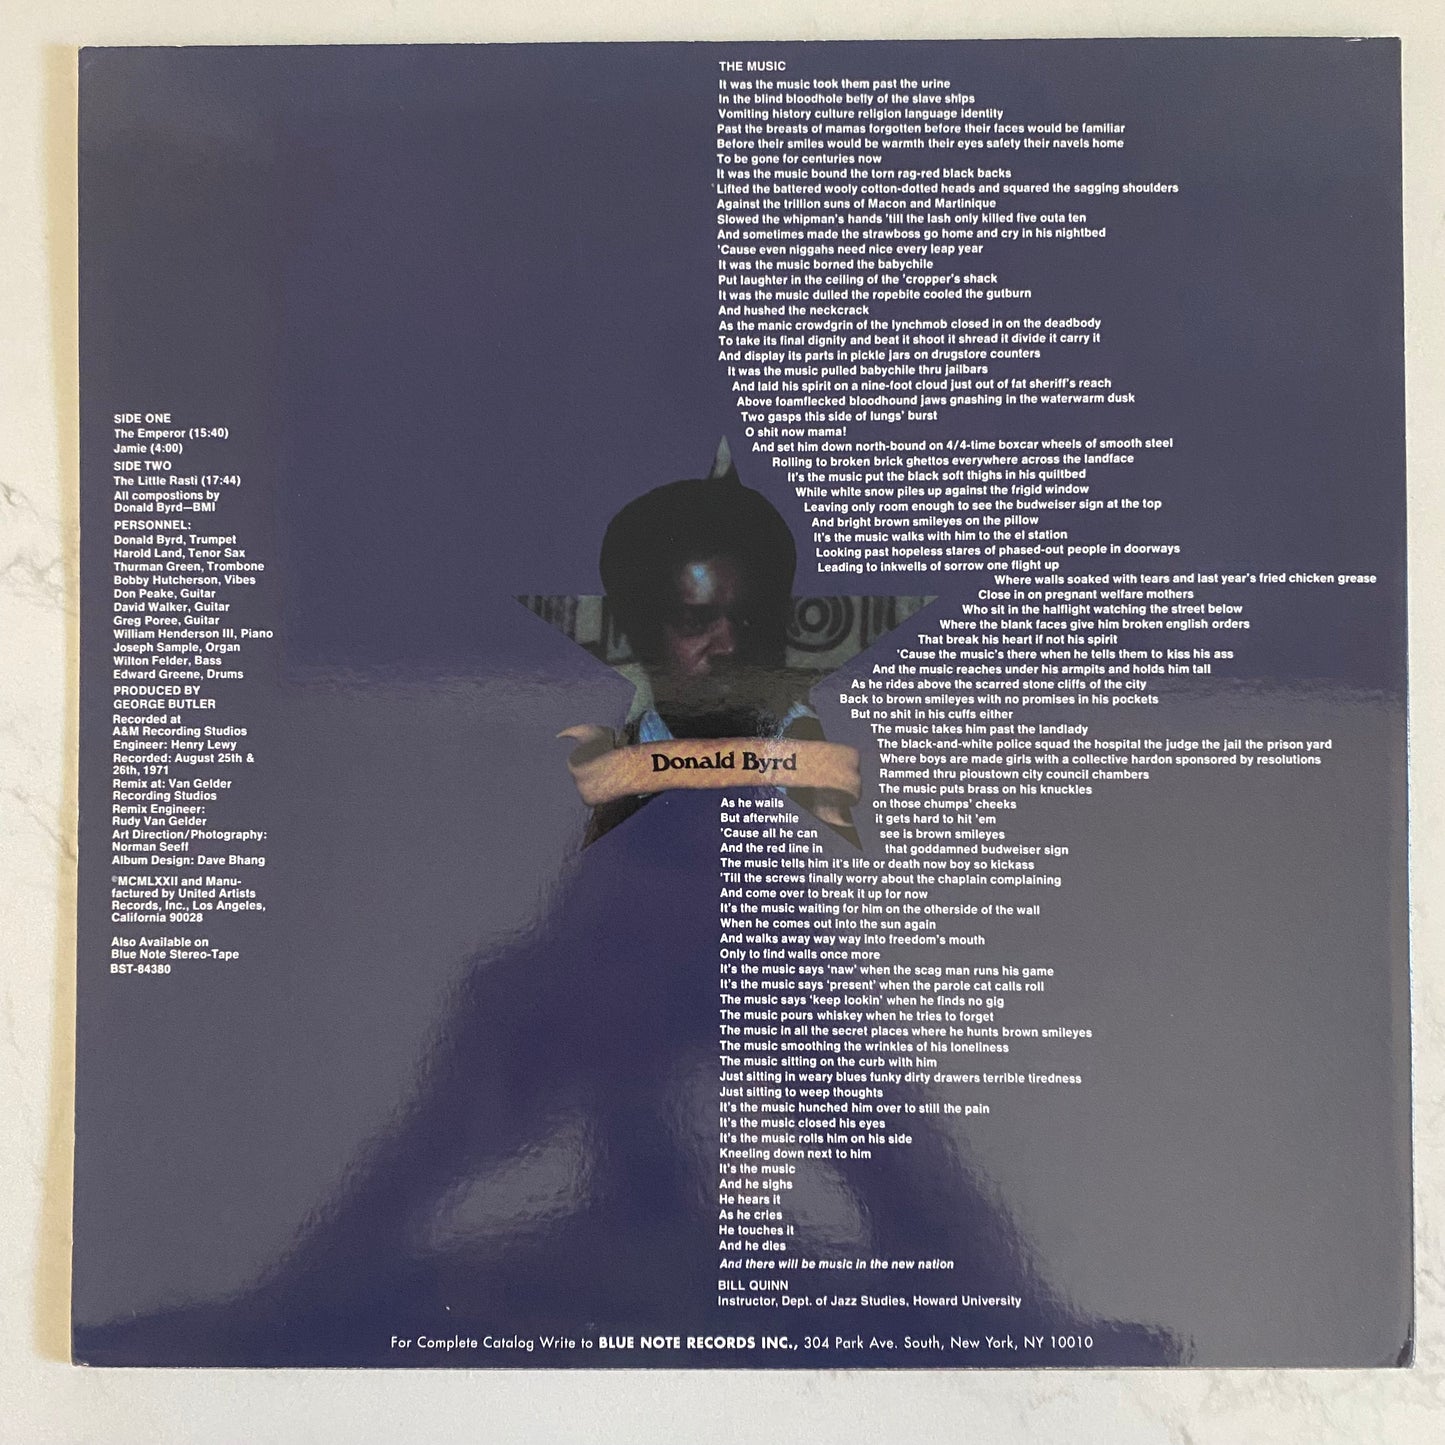 Donald Byrd - Ethiopian Knights (LP, Album, RE). FUNK JAZZ